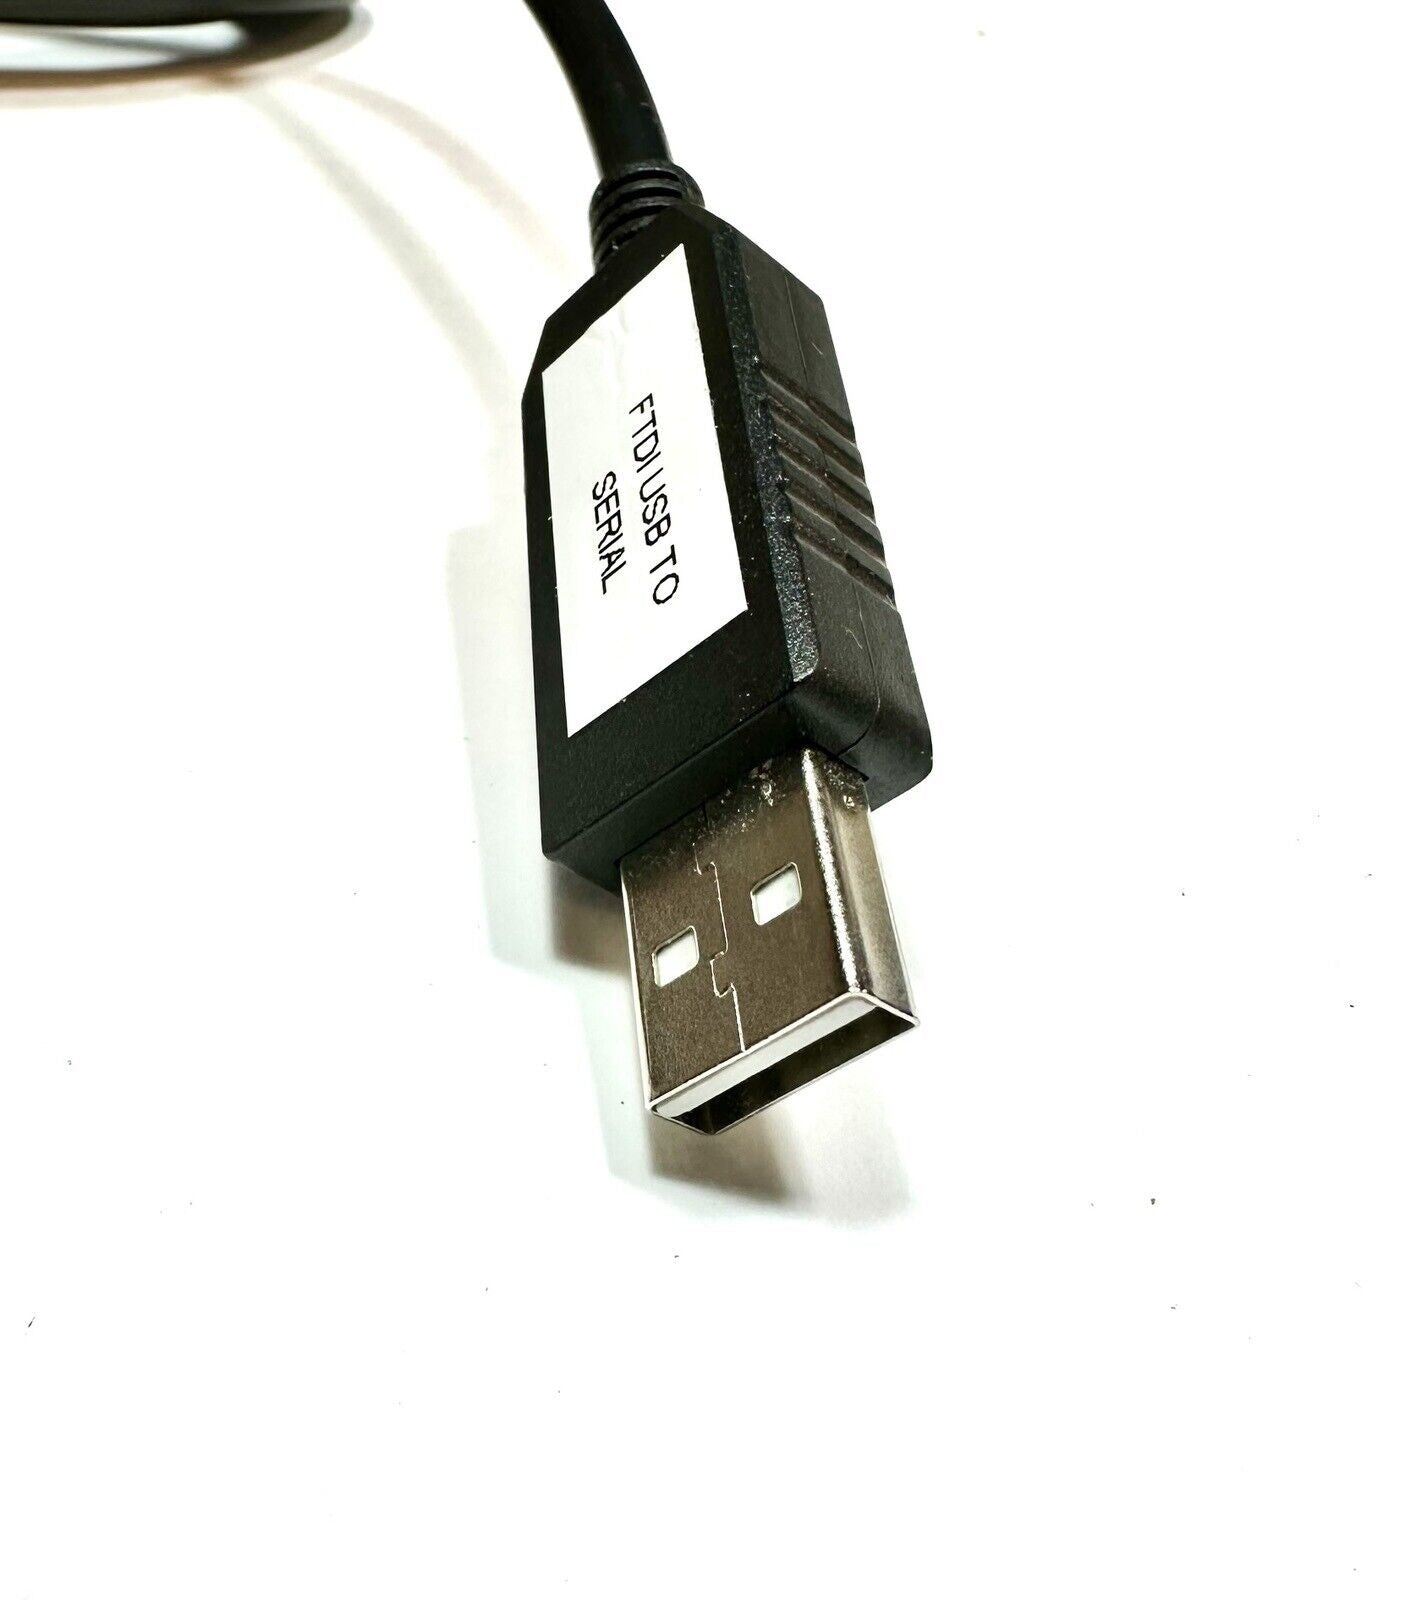 Rear Programming Cable for Motorola XTL / ASTRO Radios